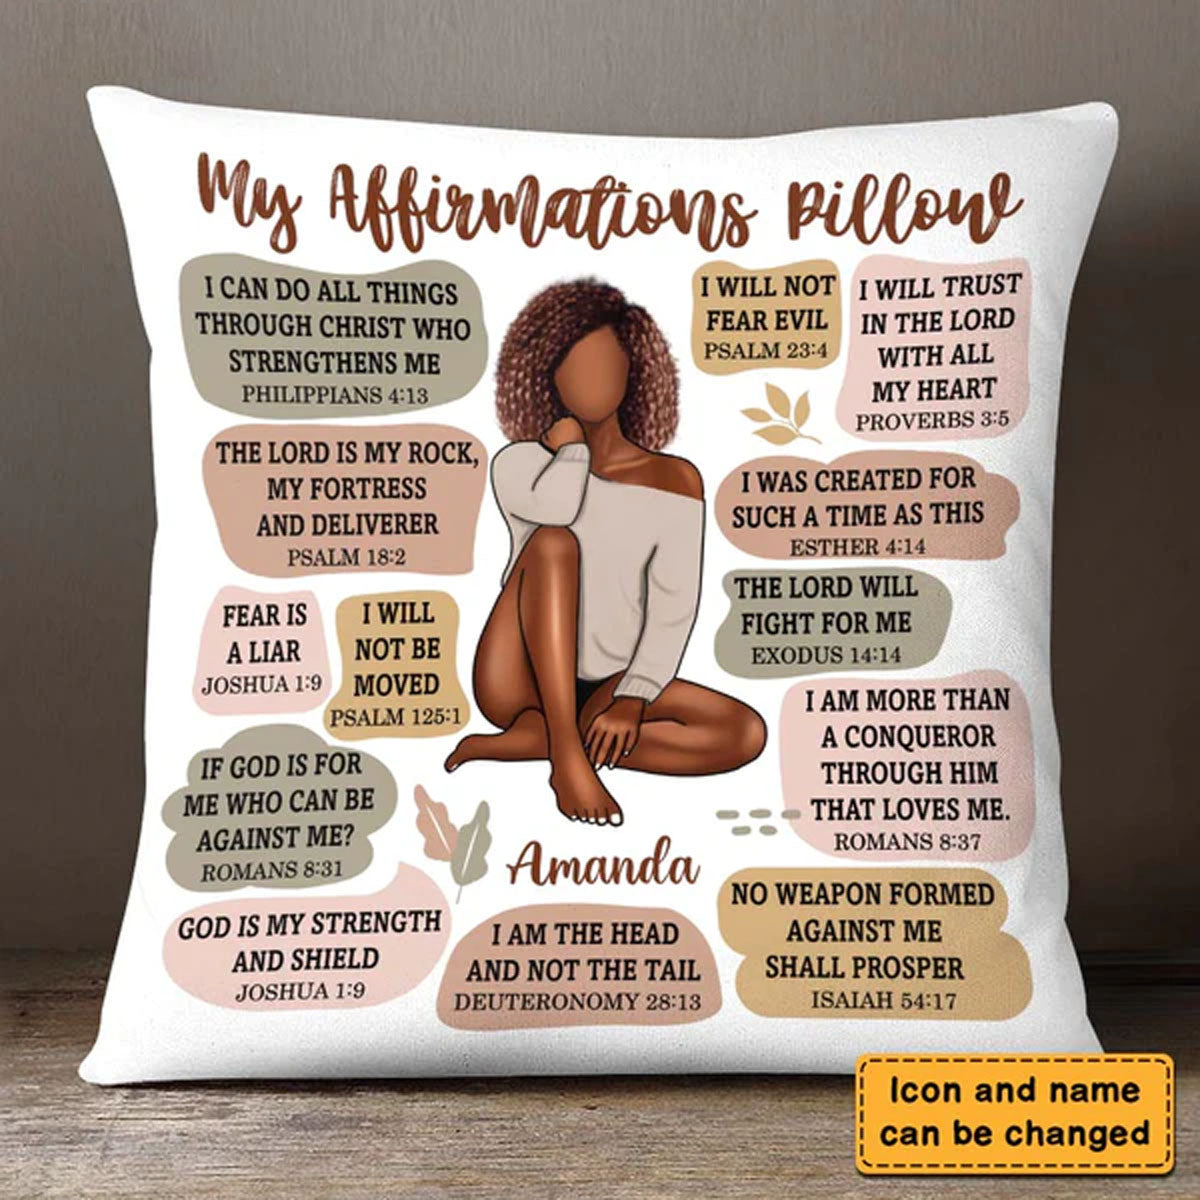 Christianartbag Pillow, Christian Affirmation Pillow, Personalized Throw Pillow, Christian Gift, Christian Pillow, Christmas Gift. - Christian Art Bag